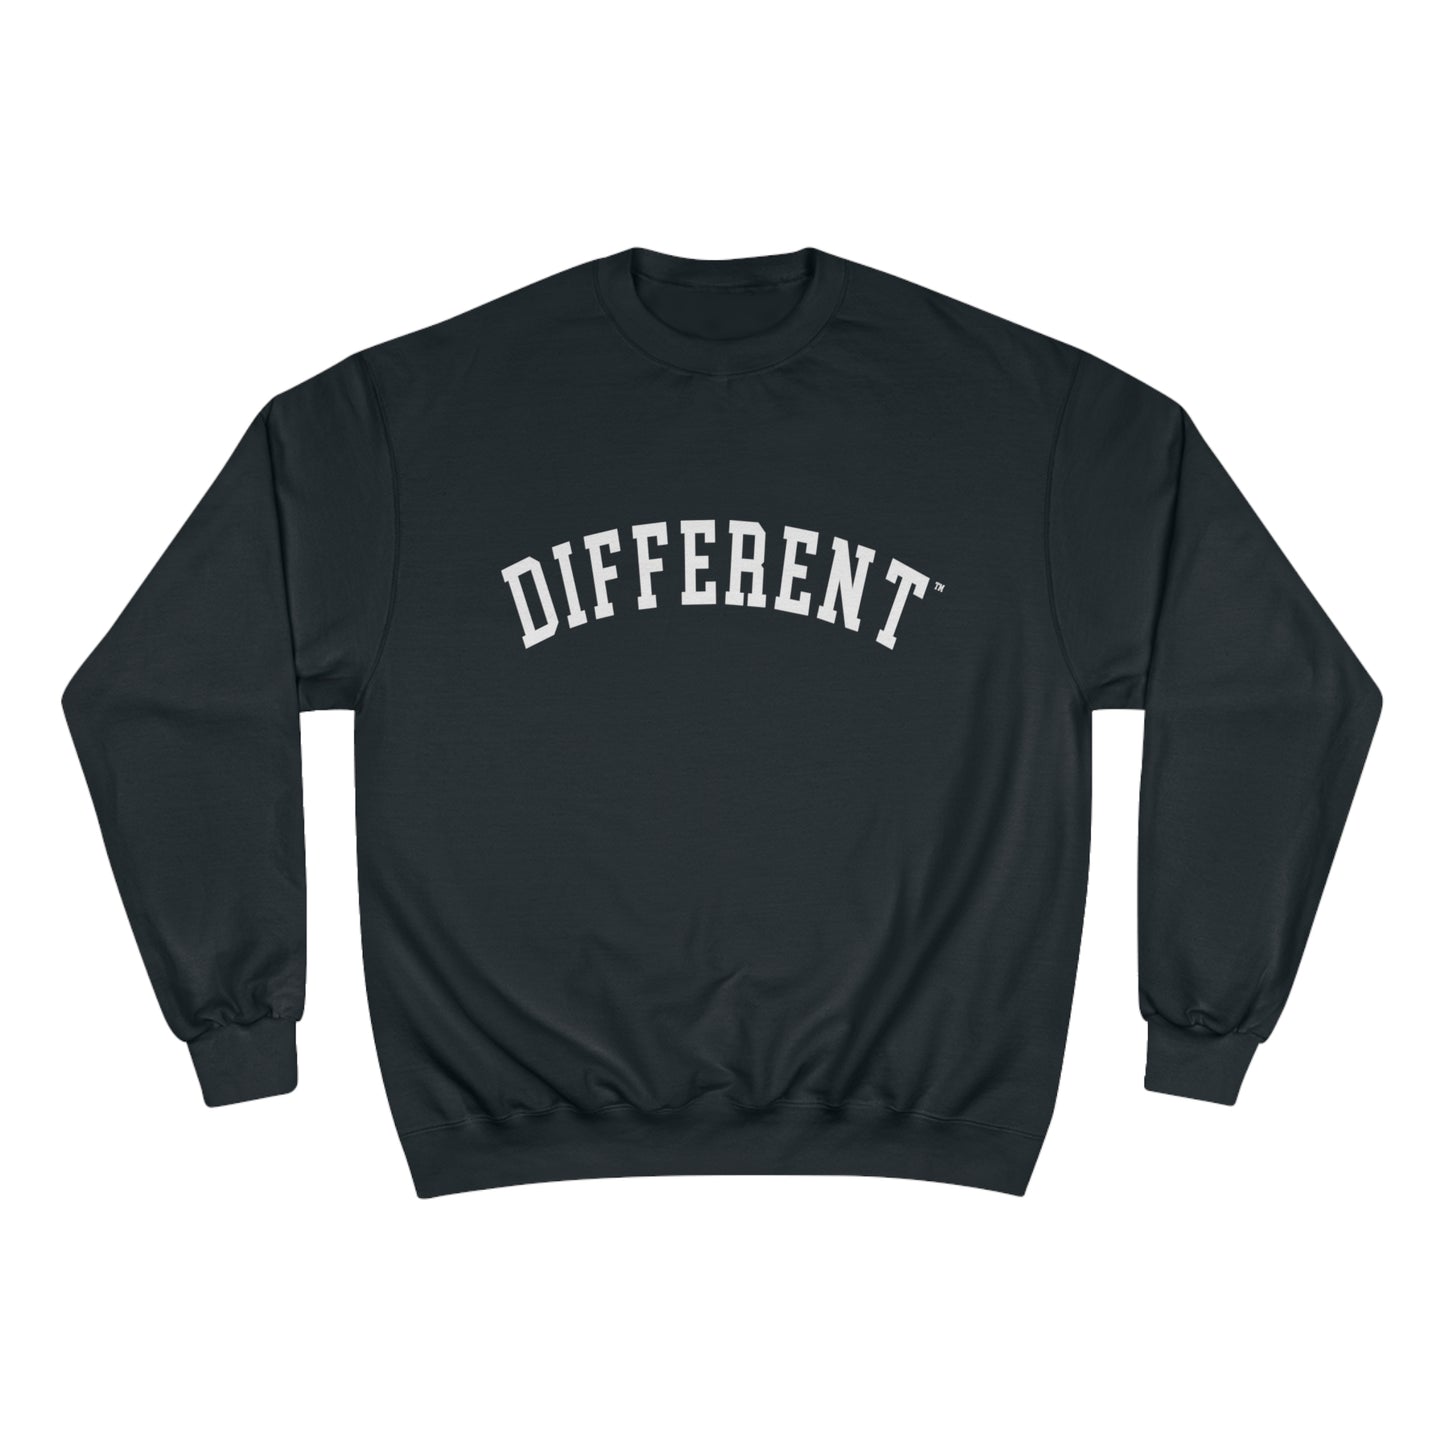 DIFFERENT Sweatshirt